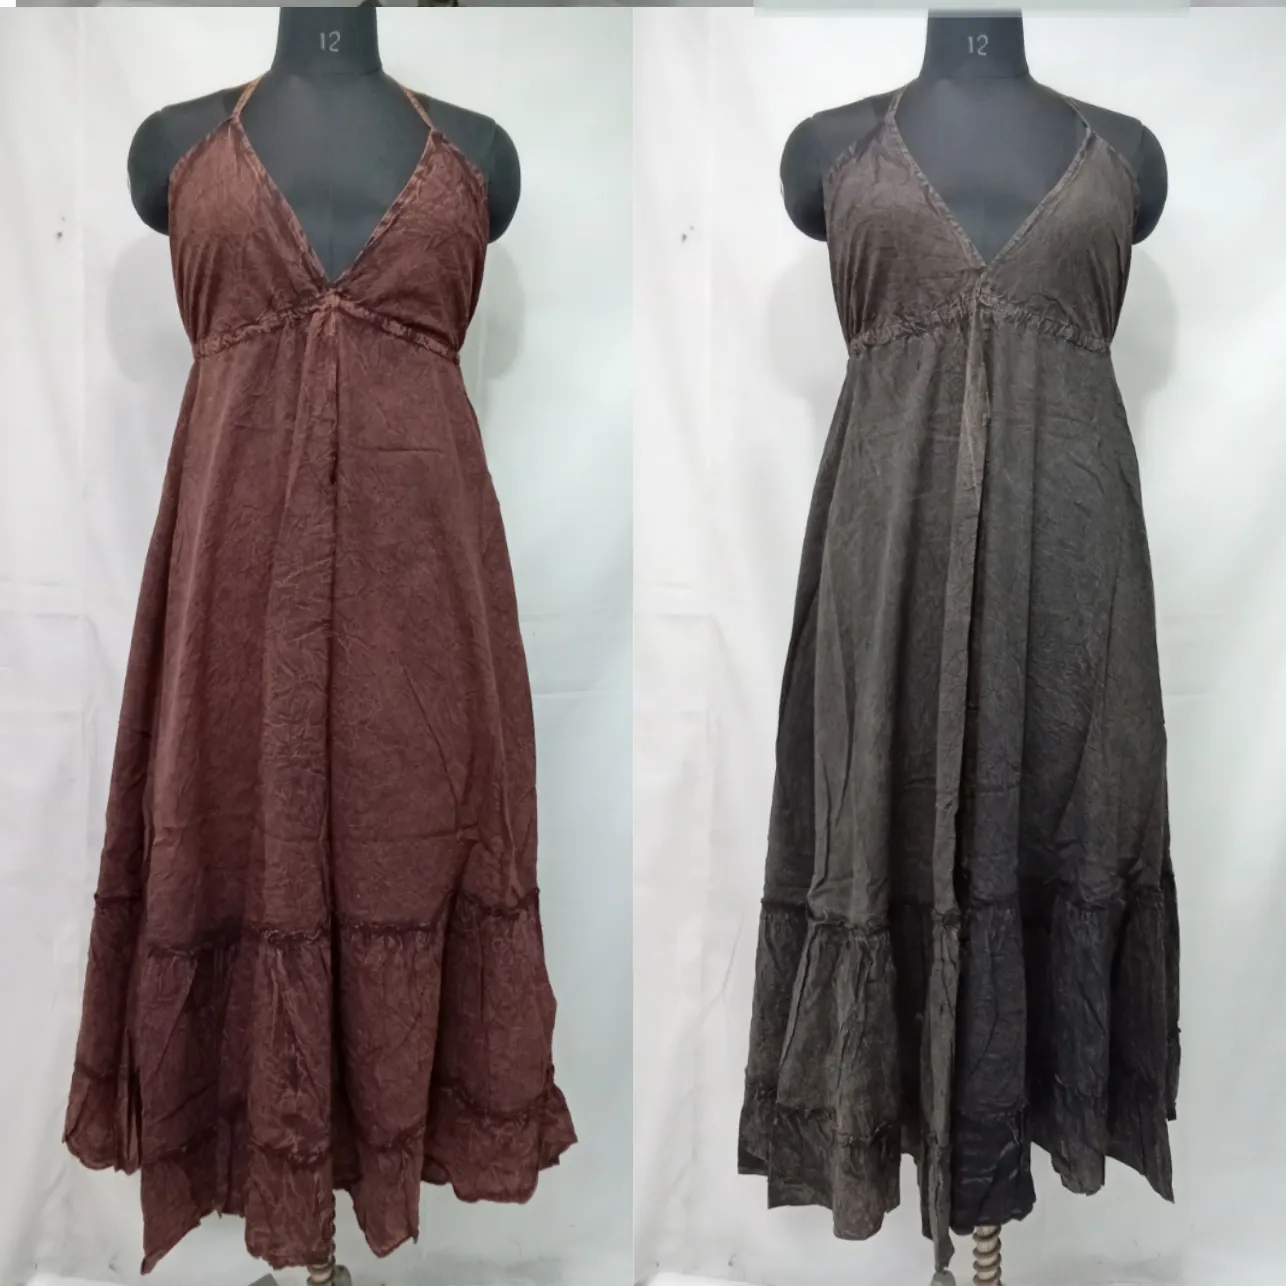 Cotton Blast Frill Dress Indian Boho Hot Sale 2022 Latest Designs Casual Dress Hot Looking Sleeveless Western Style Dress